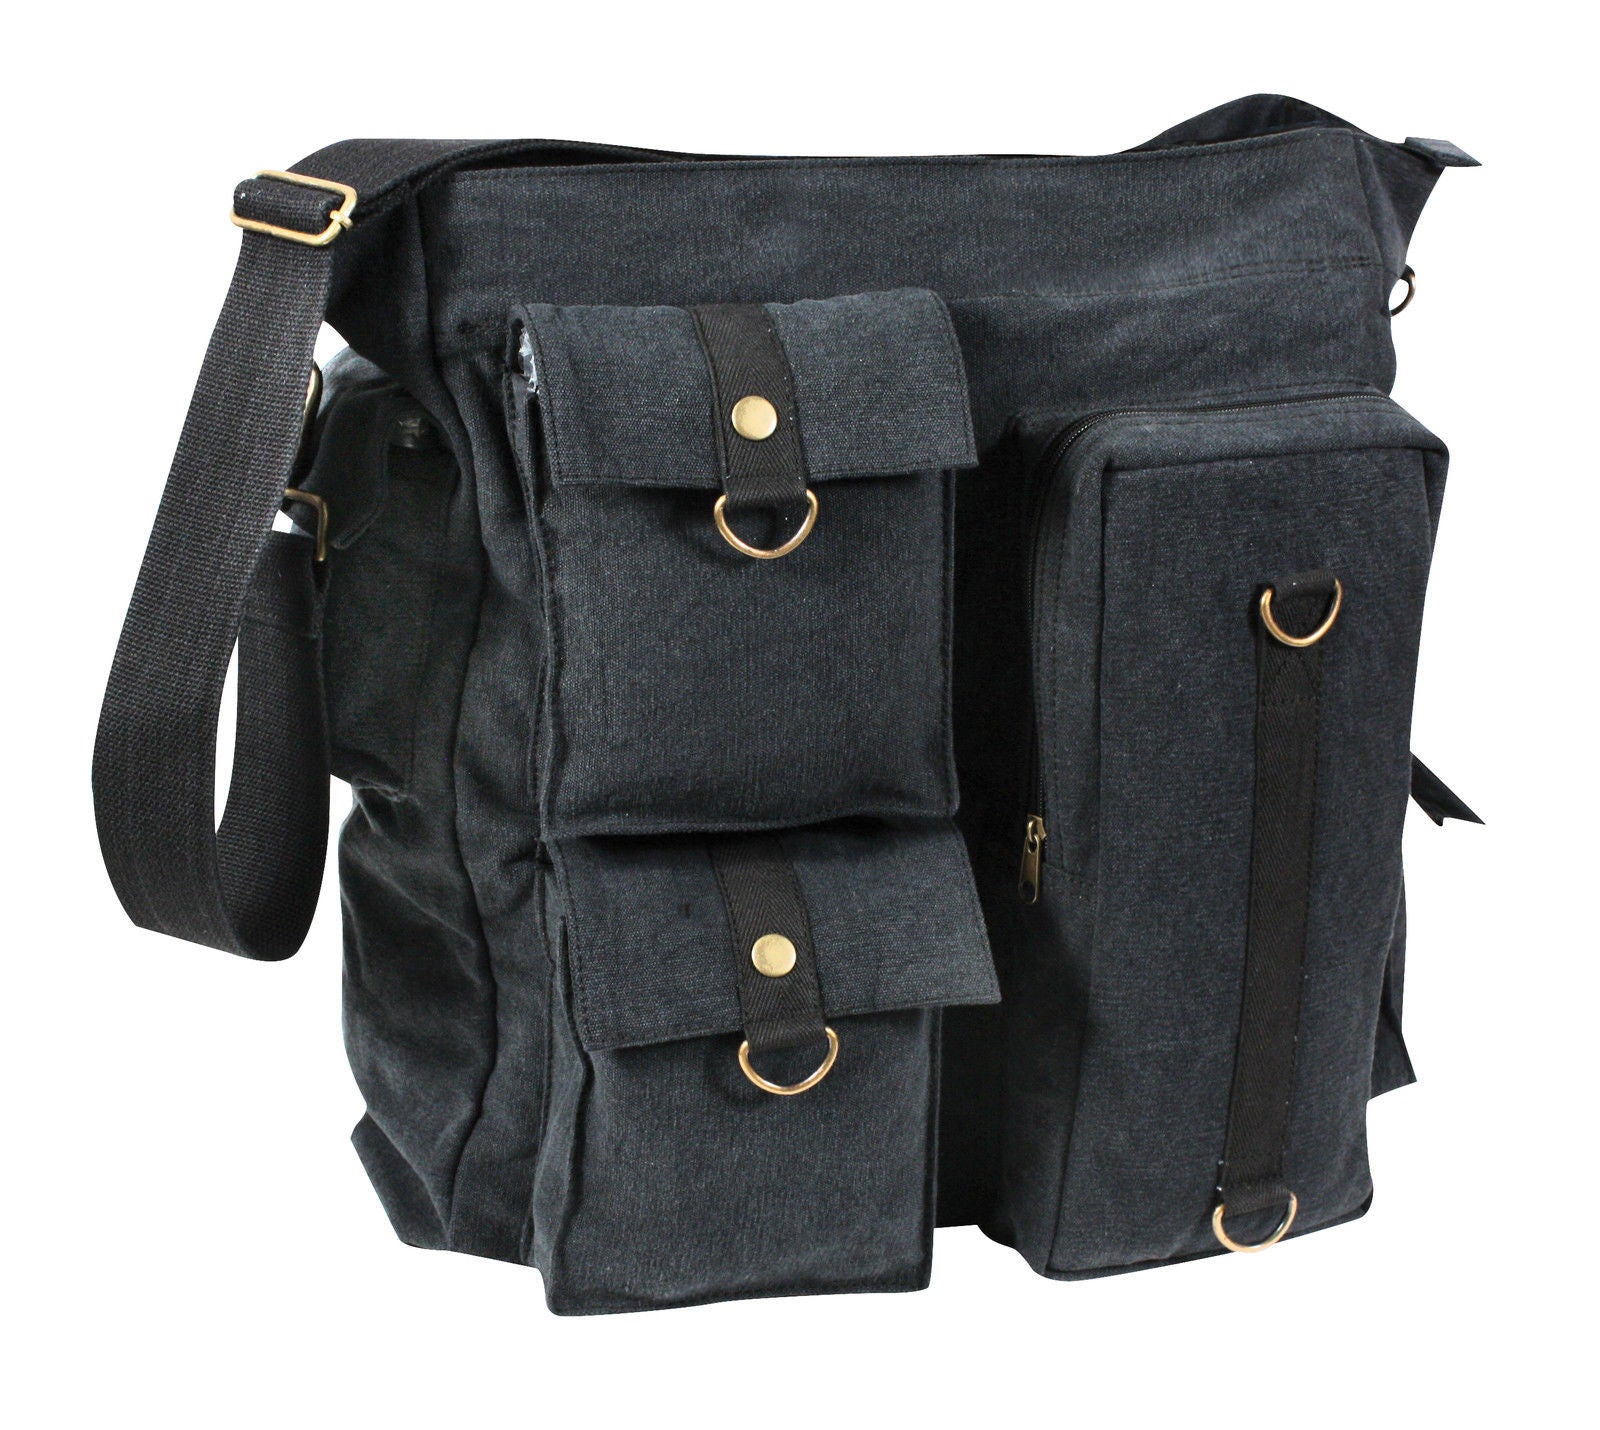 Сумка карман мужская. Rothco Vintage Bag. Сумка Rothco. Наплечная сумка мужская. Сумка с карманами.